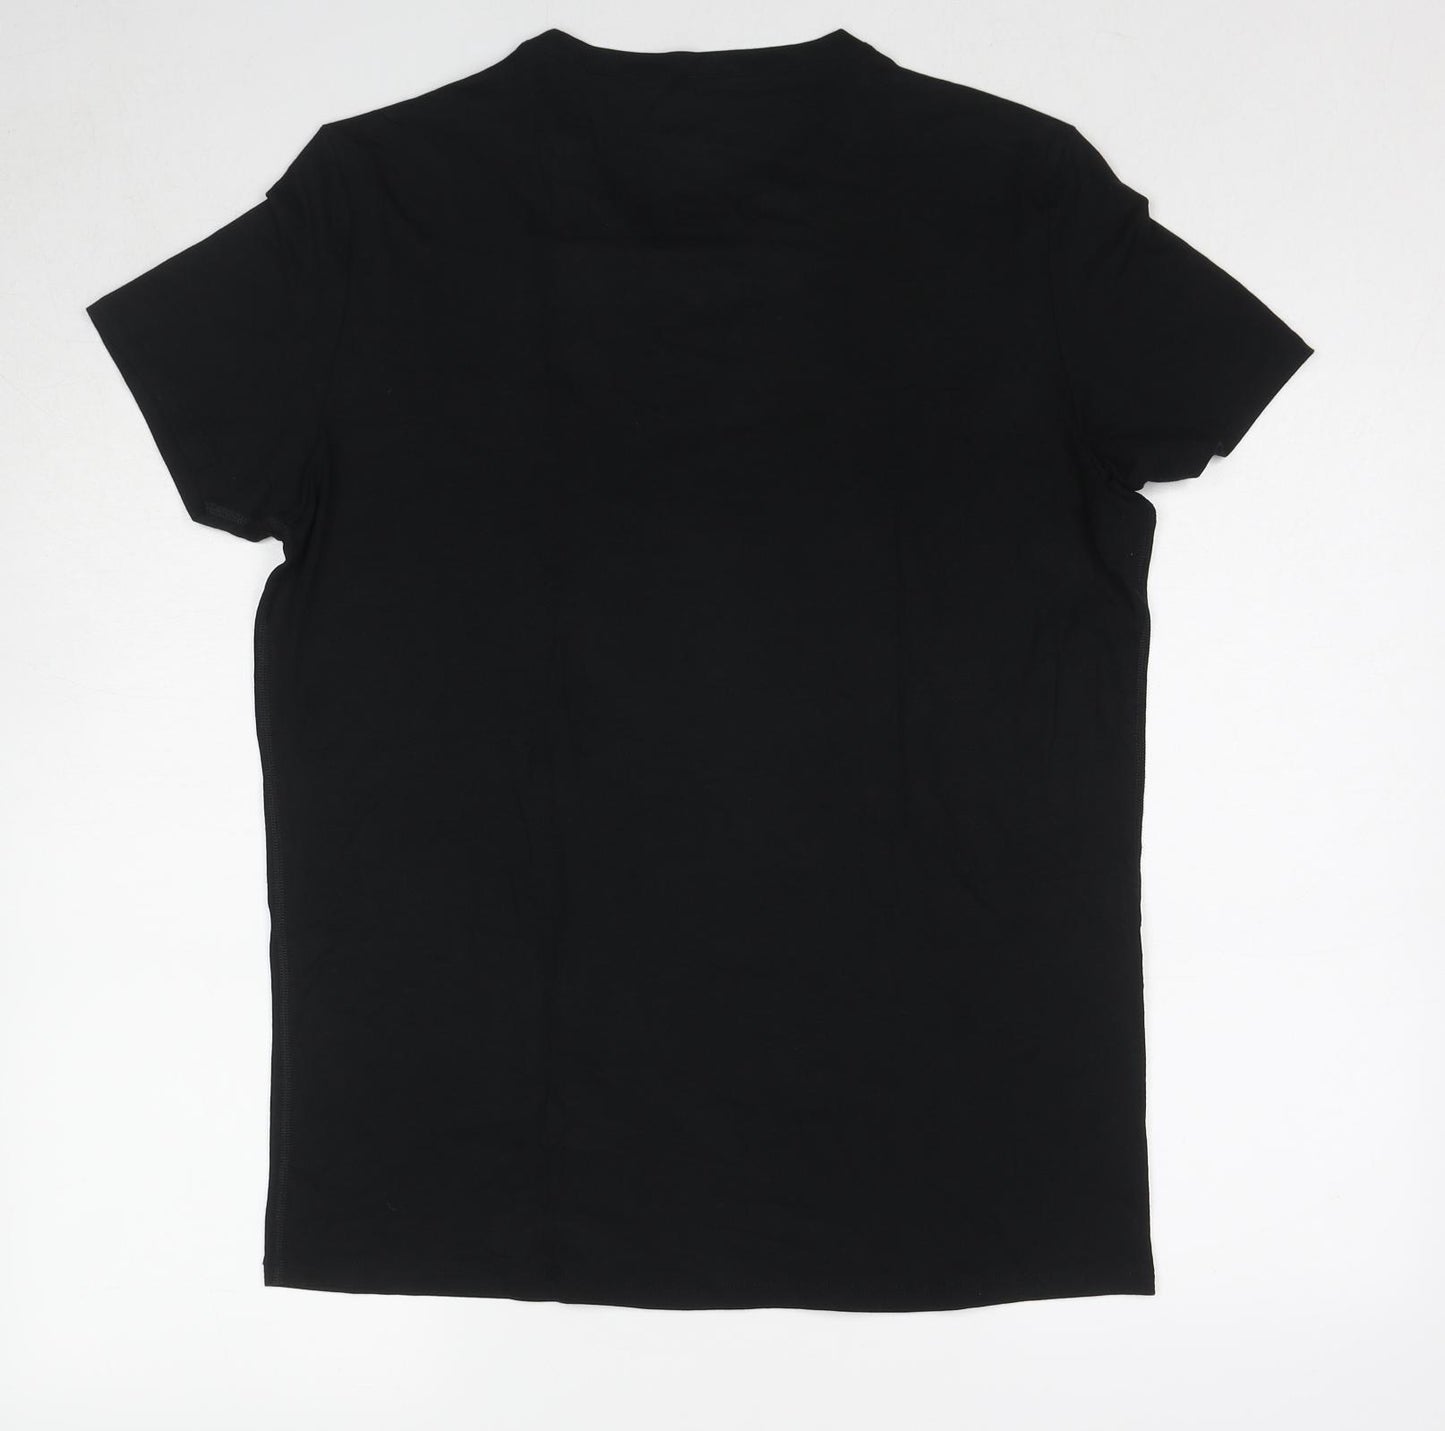 Marks and Spencer Womens Black Acrylic Basic T-Shirt Size L Crew Neck